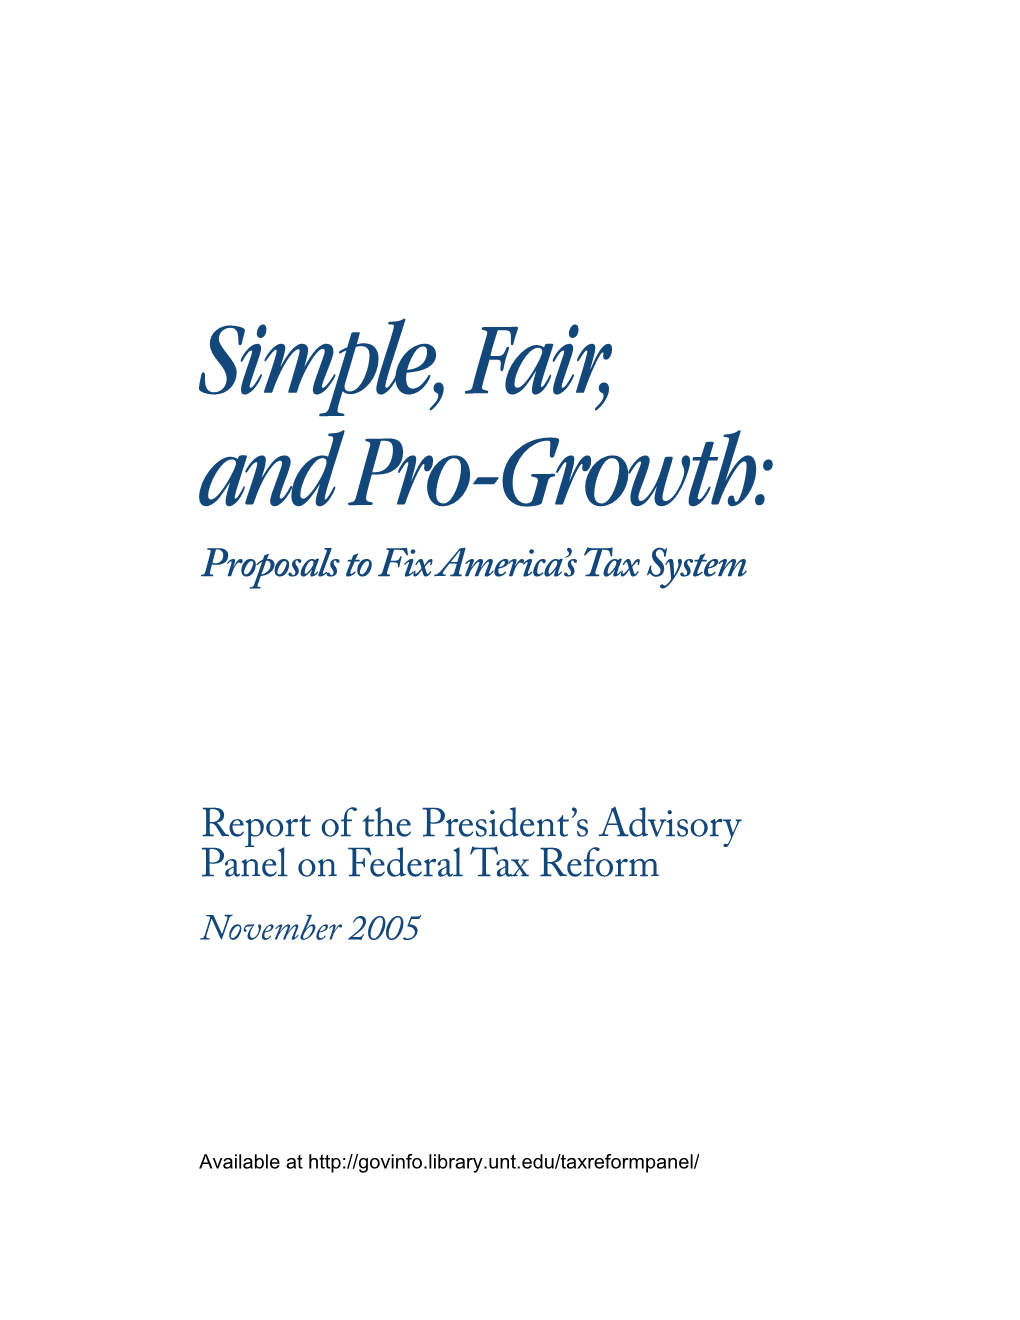 2005 Report of the President's Advisory